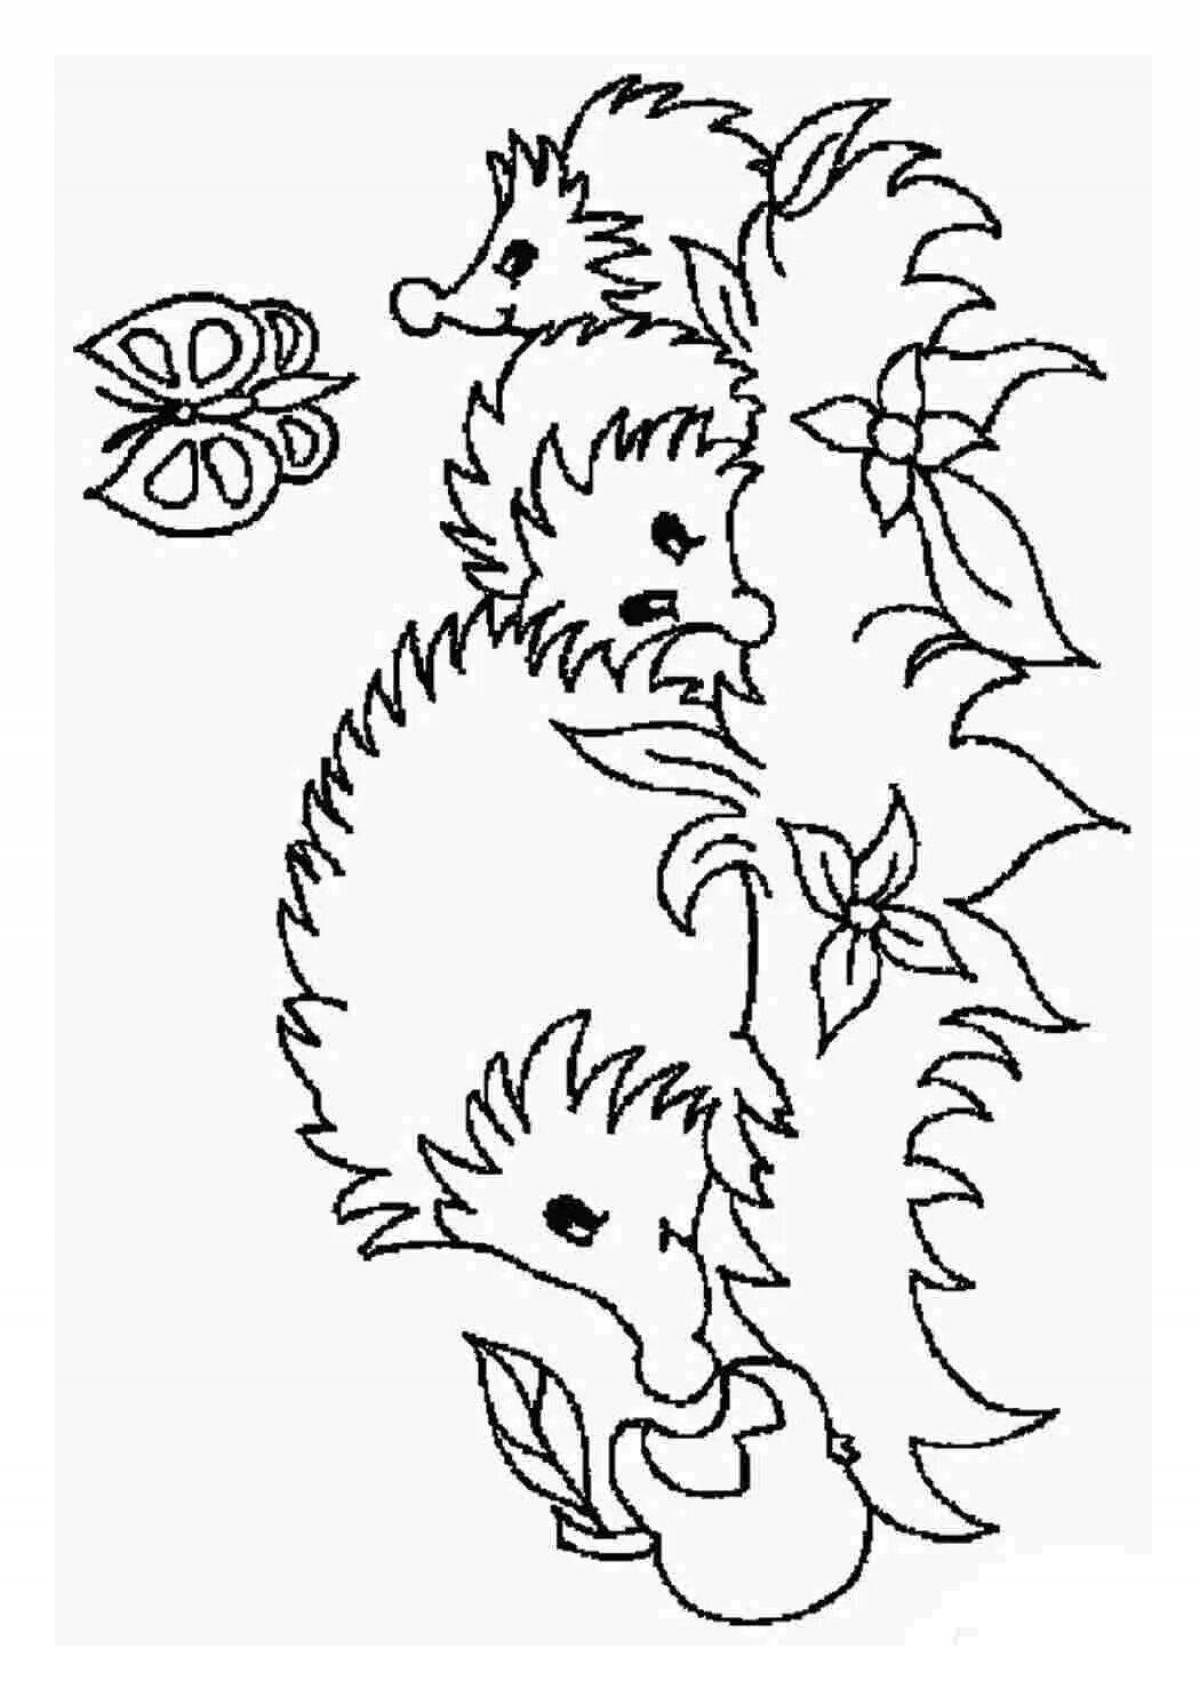 Cute hedgehog coloring book for beginners